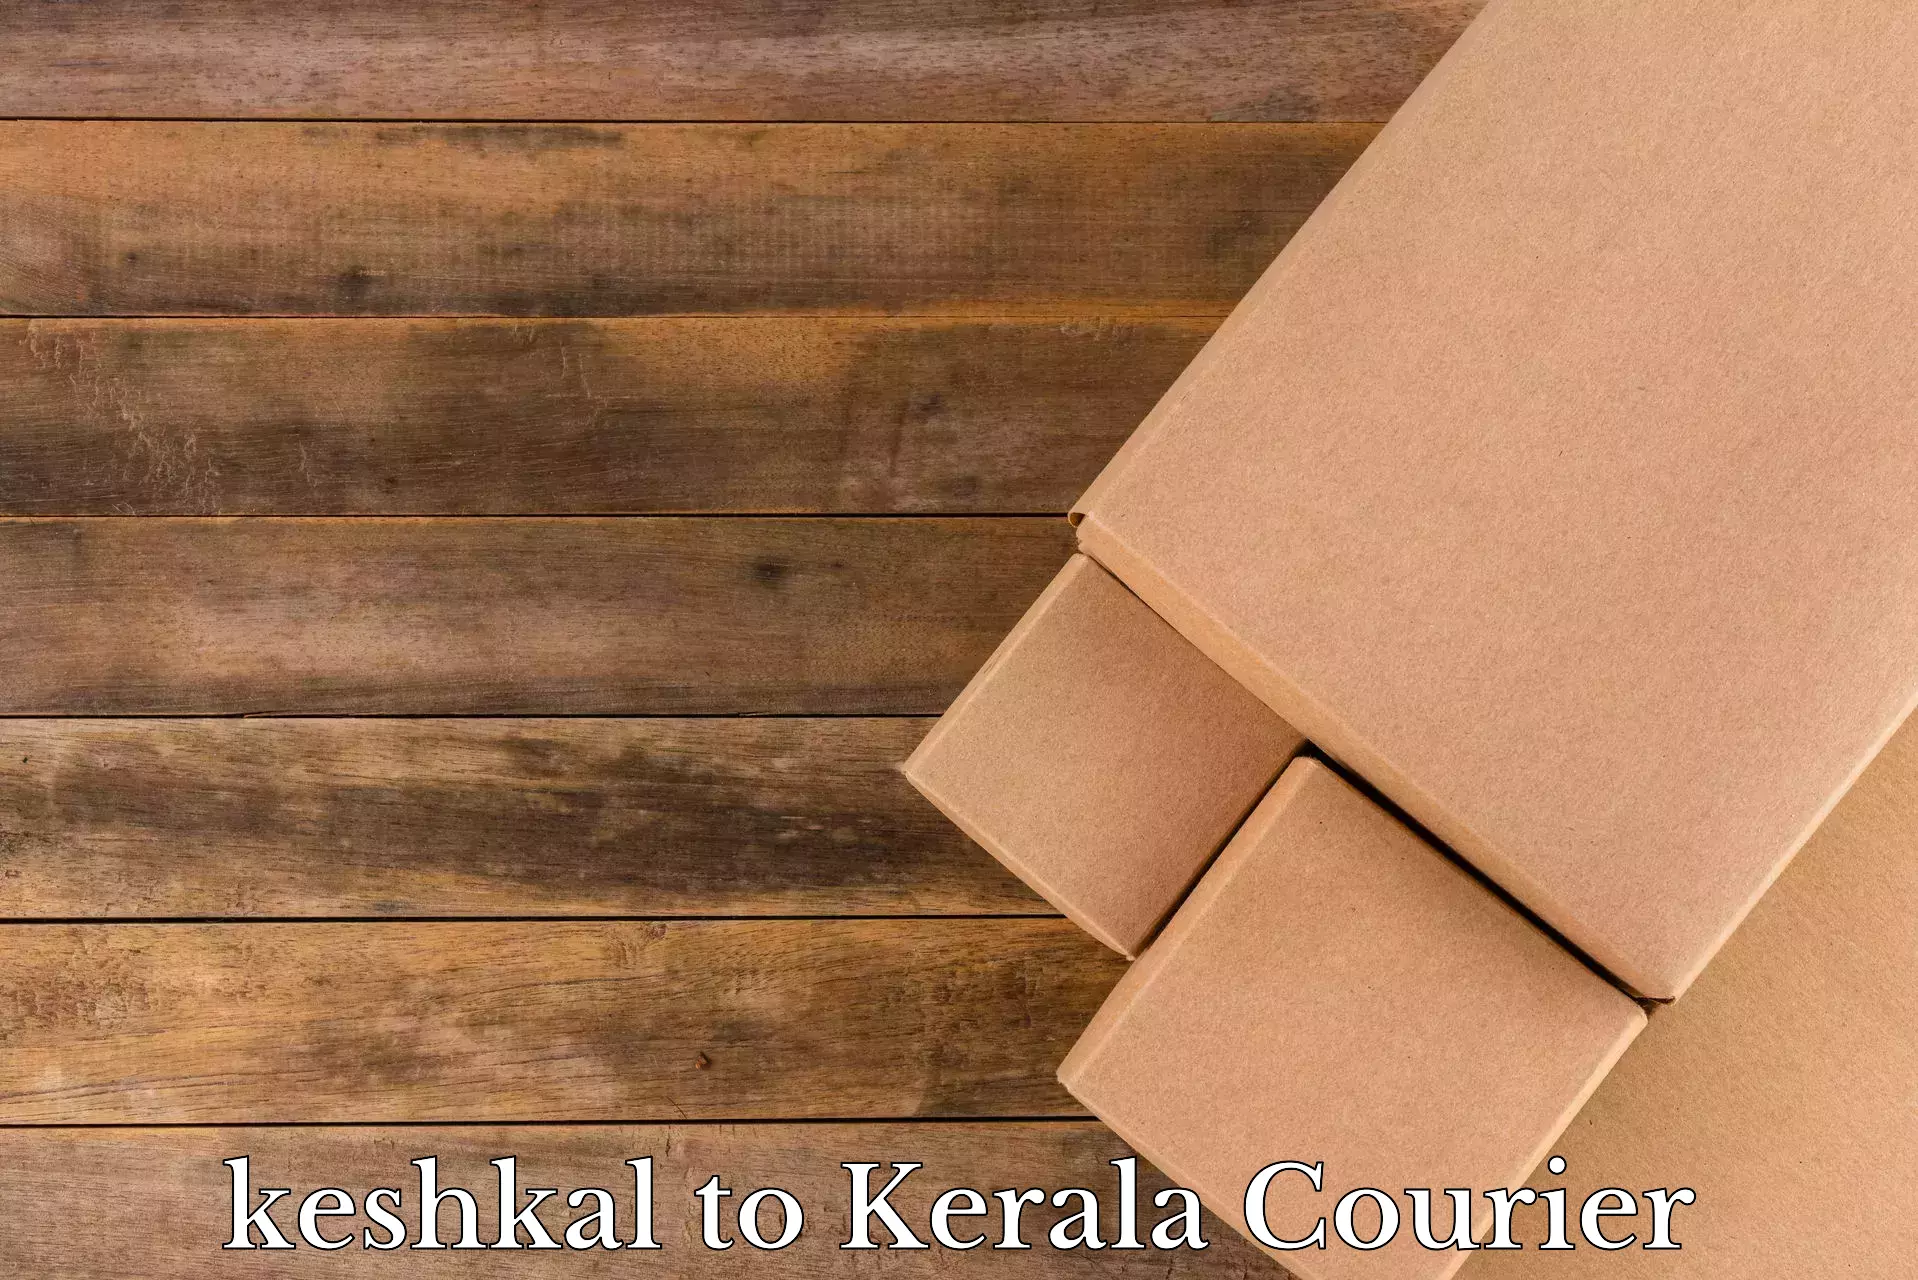 Home shifting experts keshkal to Kozhikode